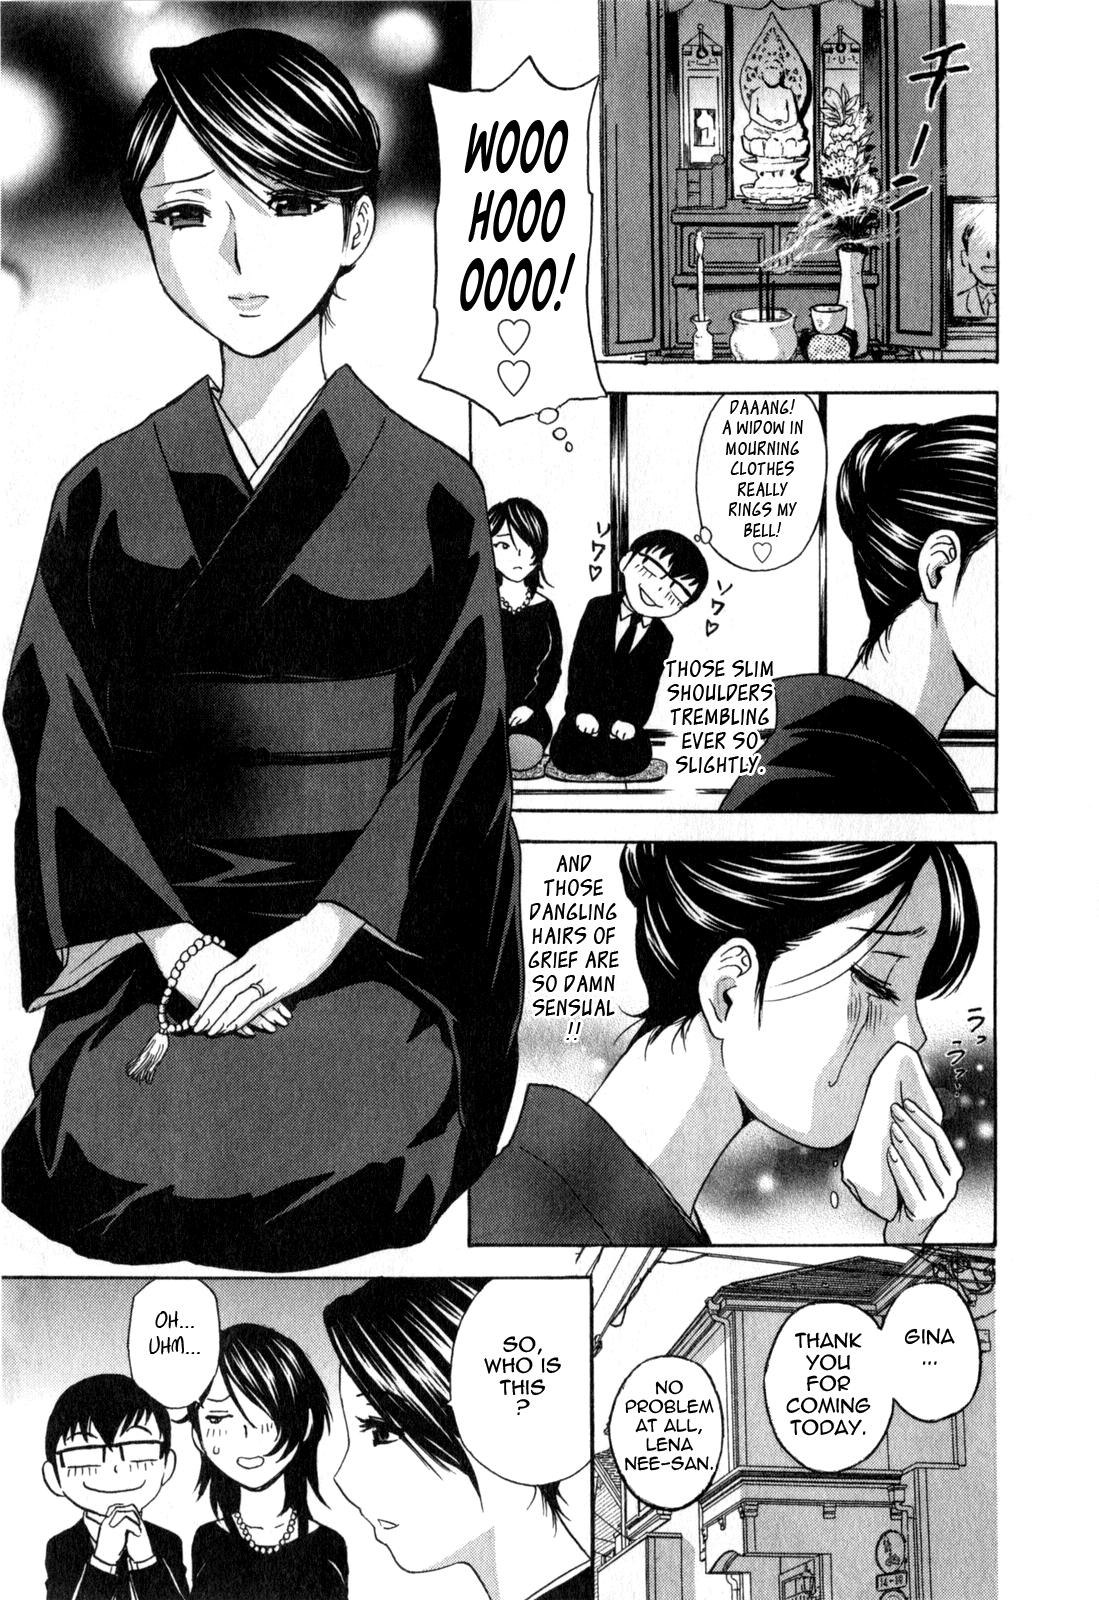 [Hidemaru] Life with Married Women Just Like a Manga 3 - Ch. 1-7 [English] {Tadanohito} 92